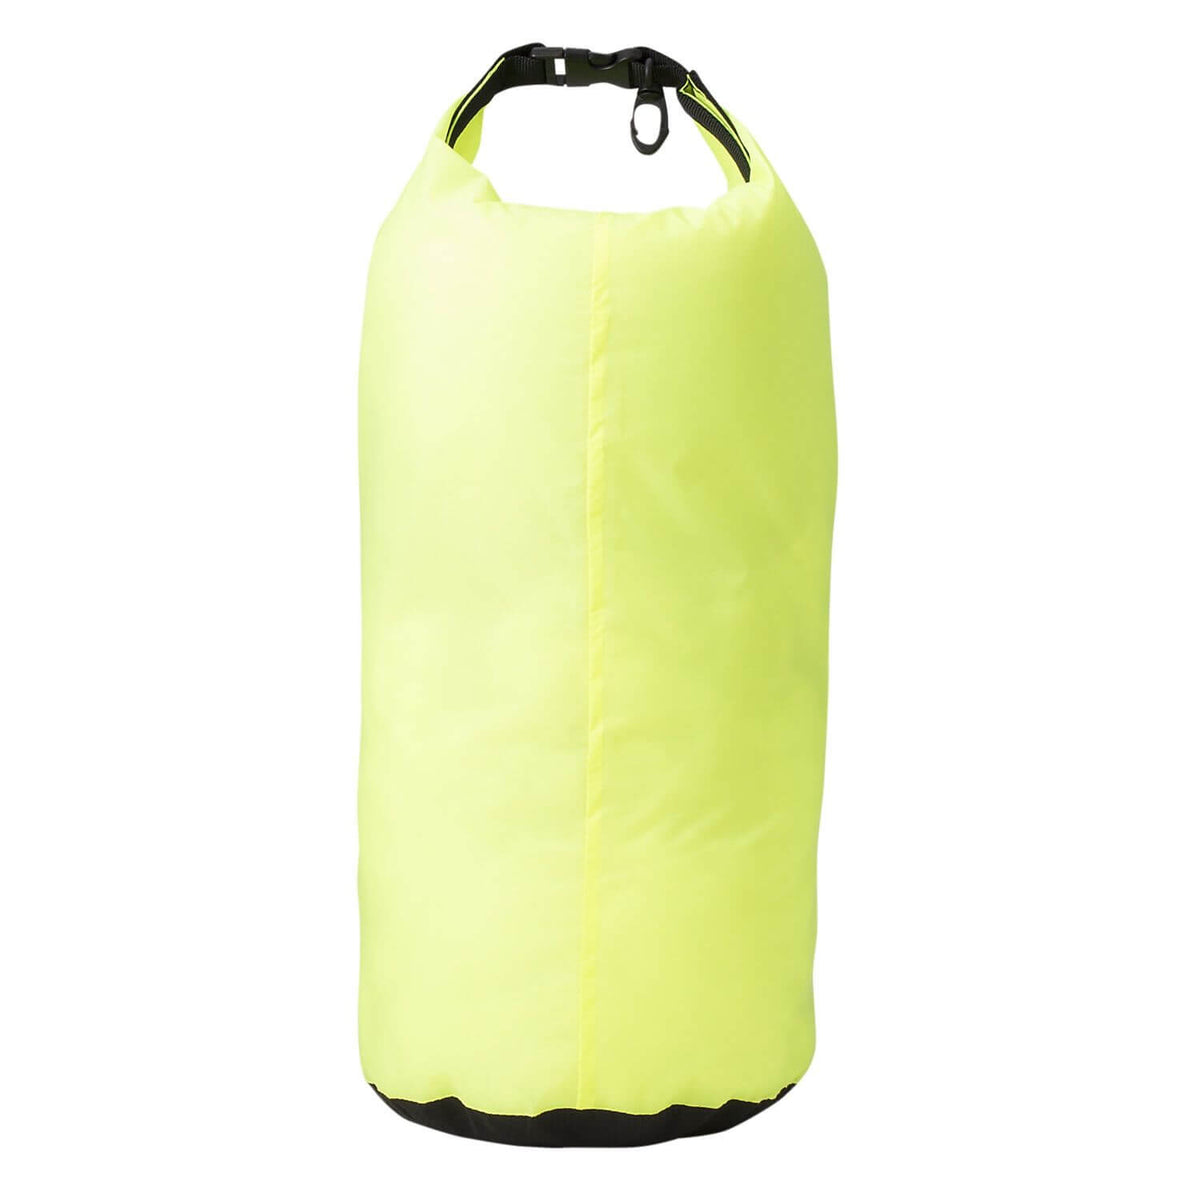 Speedo 13L Unisex Lightweight Water Resistant Pool Side Bag